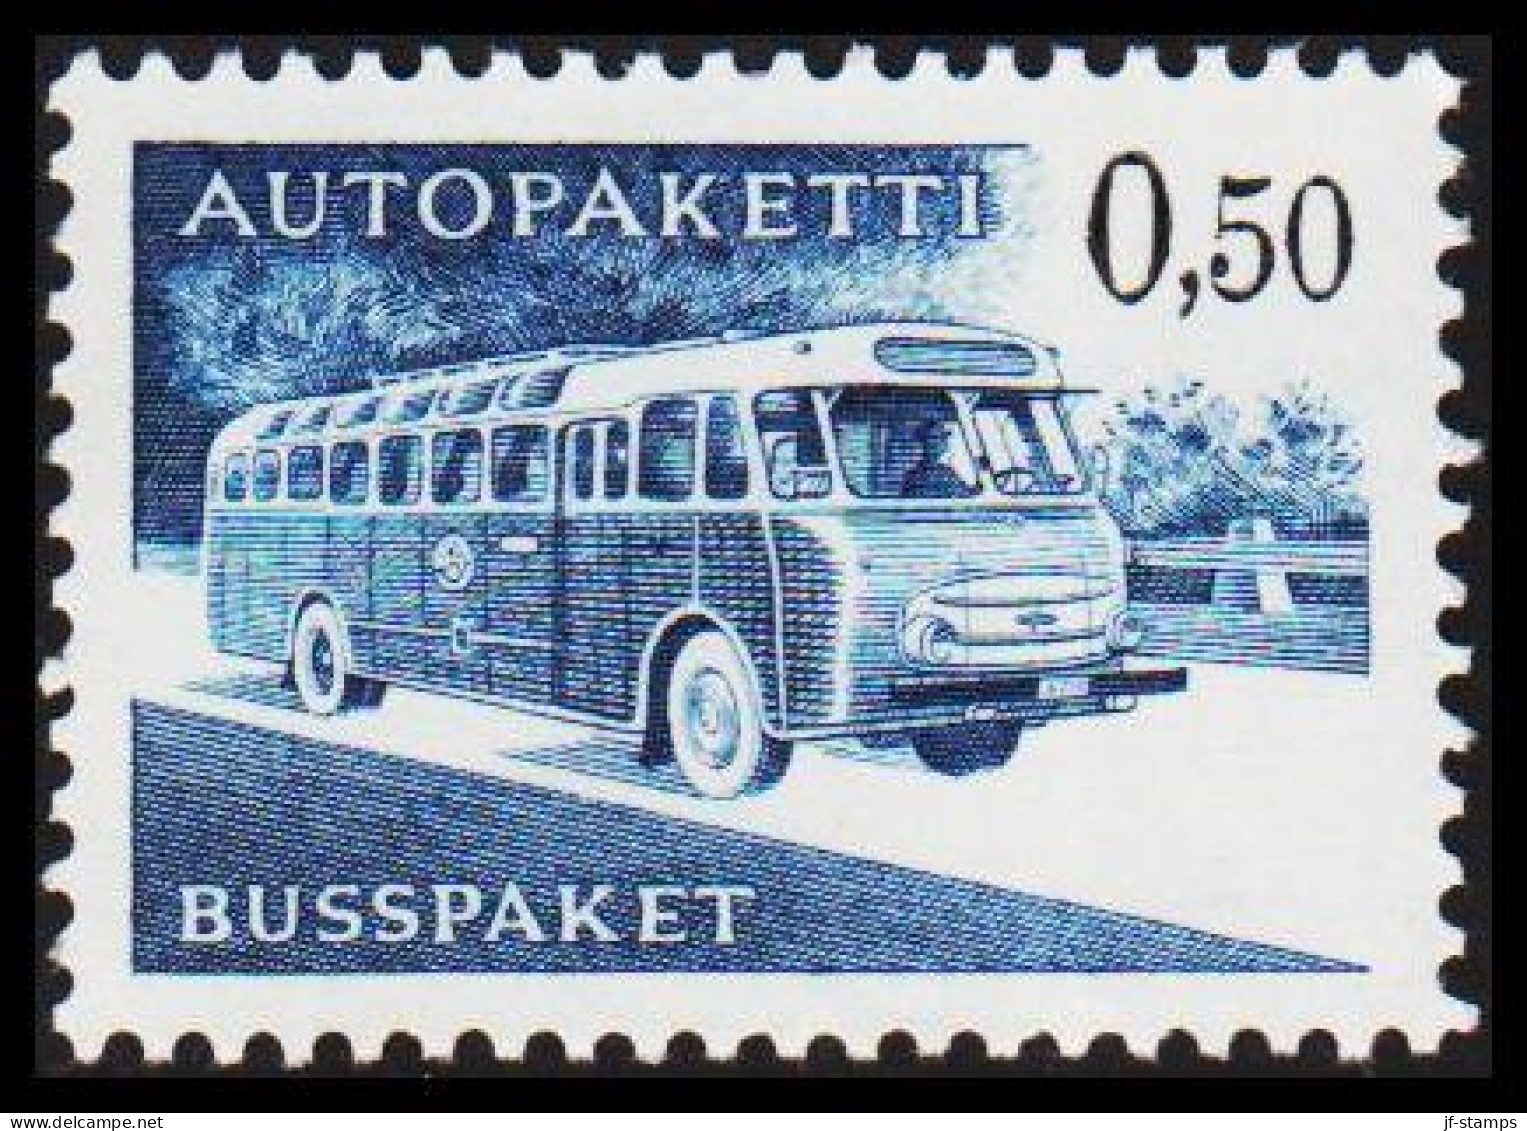 1963-1980. FINLAND. Mail Bus. 0,50 Mk. AUTOPAKETTI - BUSSPAKET Never Hinged. Normal Paper.... (Michel AP 12x) - JF535630 - Pakjes Per Postbus